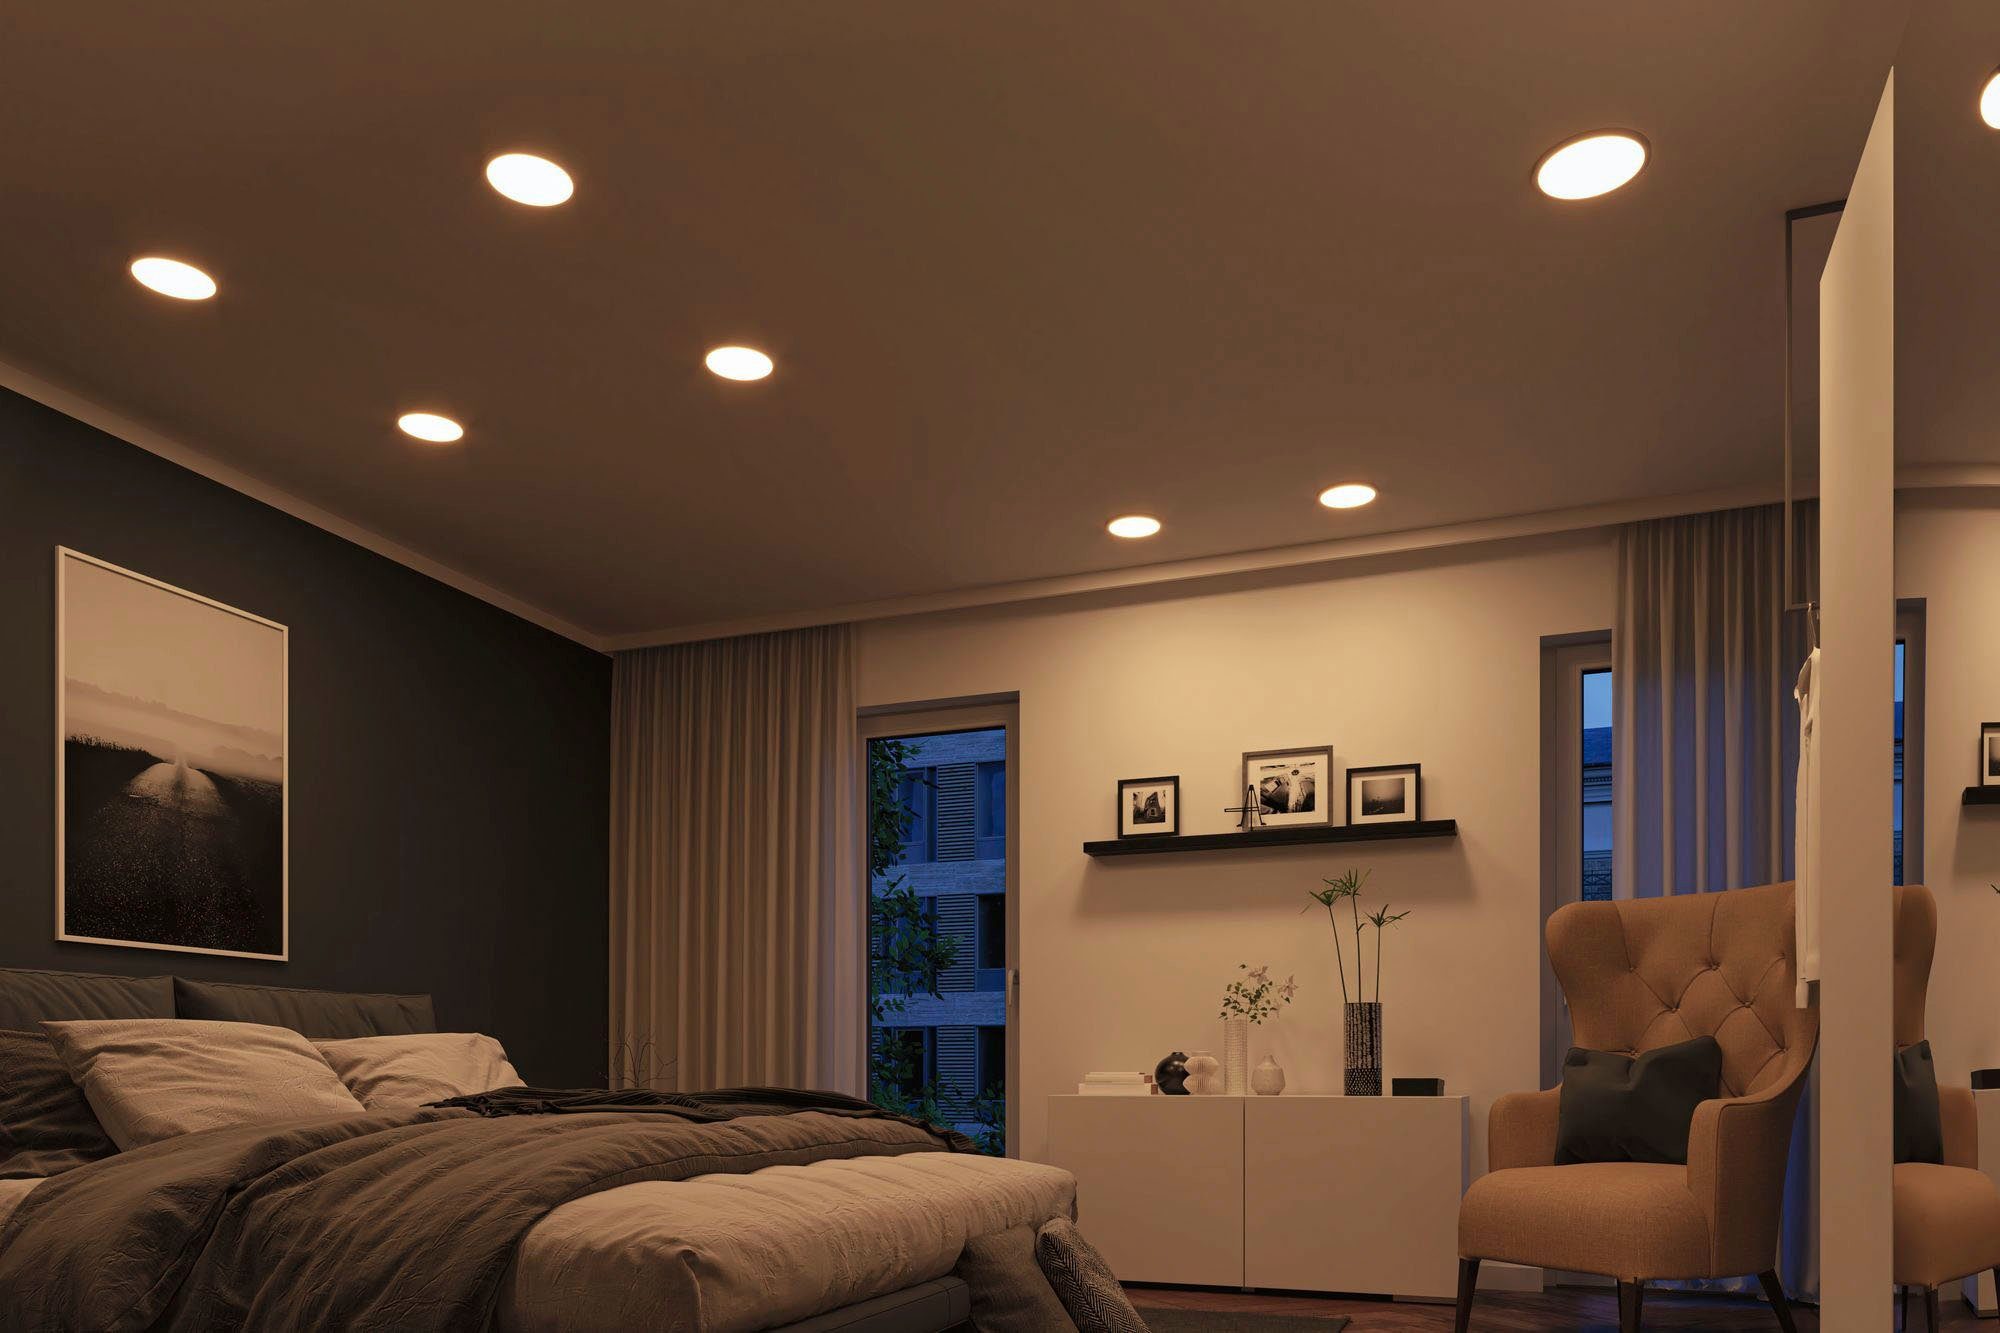 fest Einbauleuchte Areo, warmweiß LED integriert, Weiß Paulmann Smart White LED Tunable - Home, kaltweiß, LED-Modul,